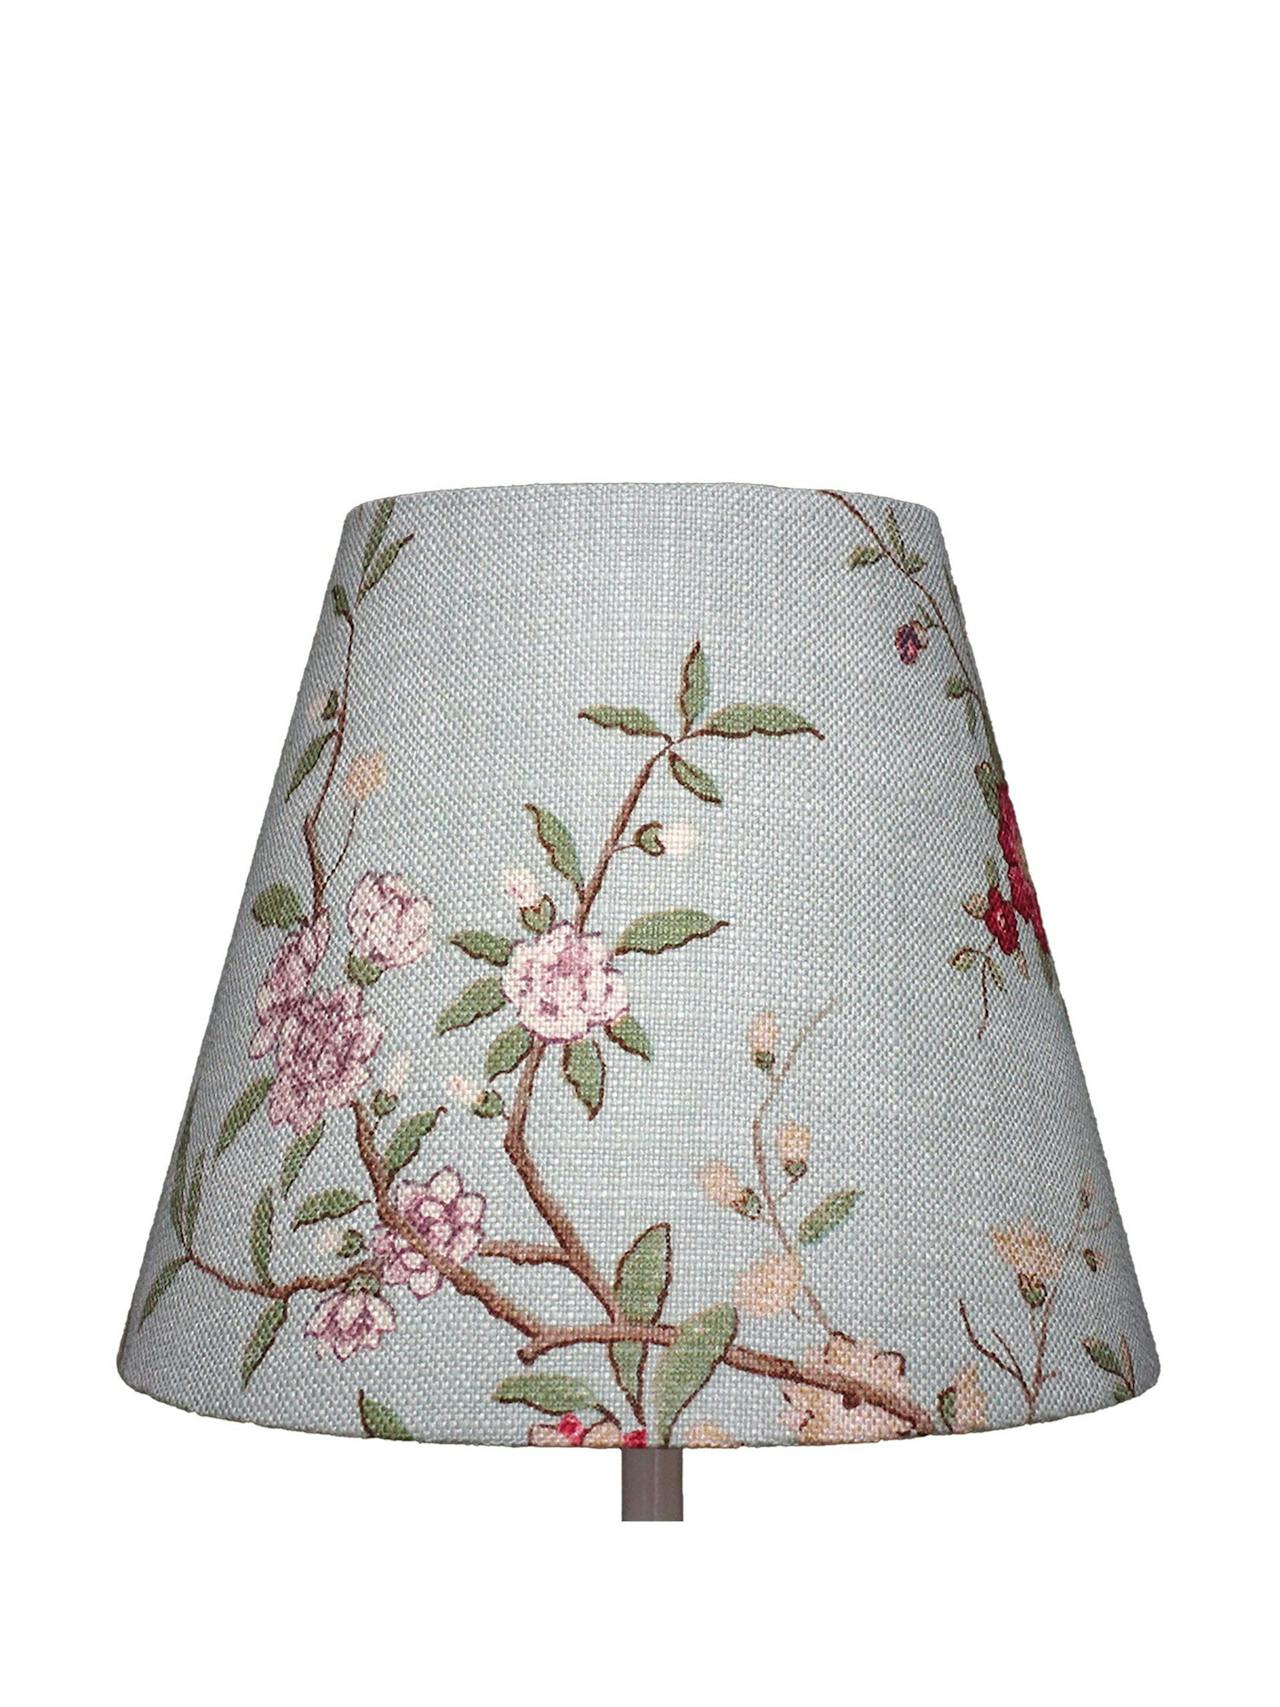 Oriental bird lampshade